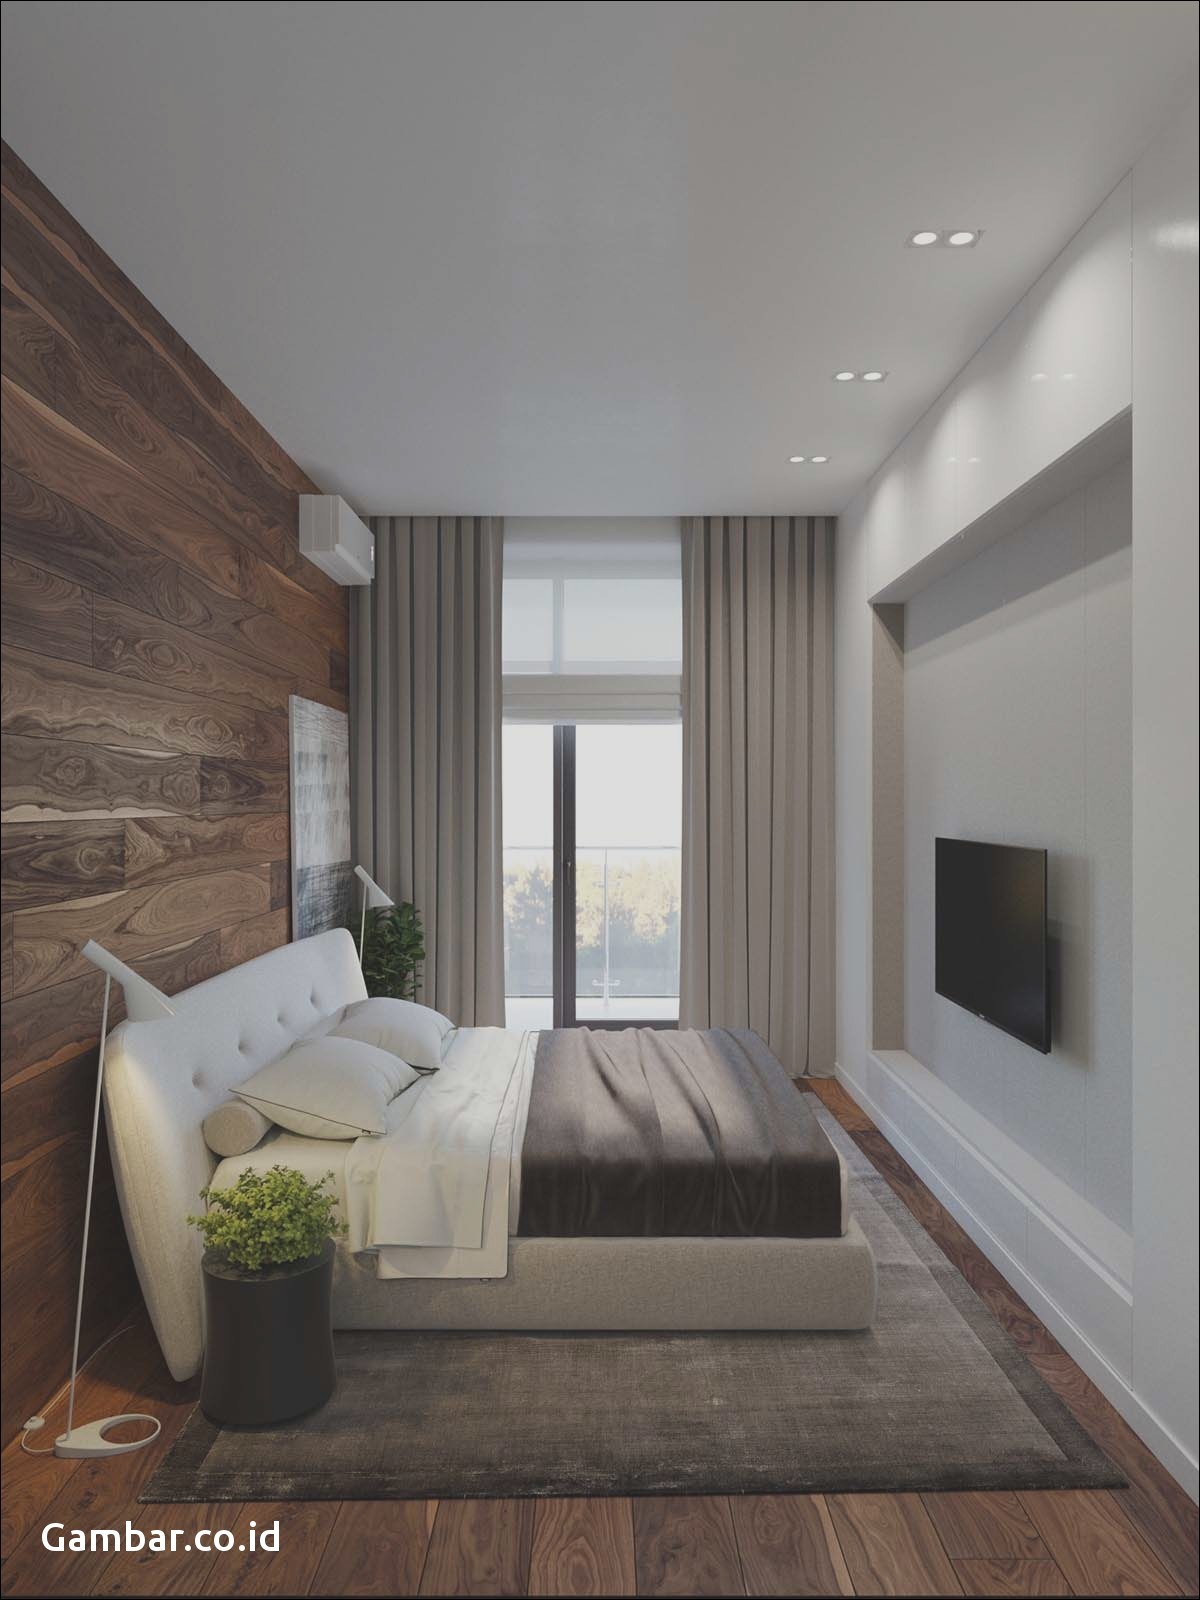 Small Bachelor Room Design - HD Wallpaper 